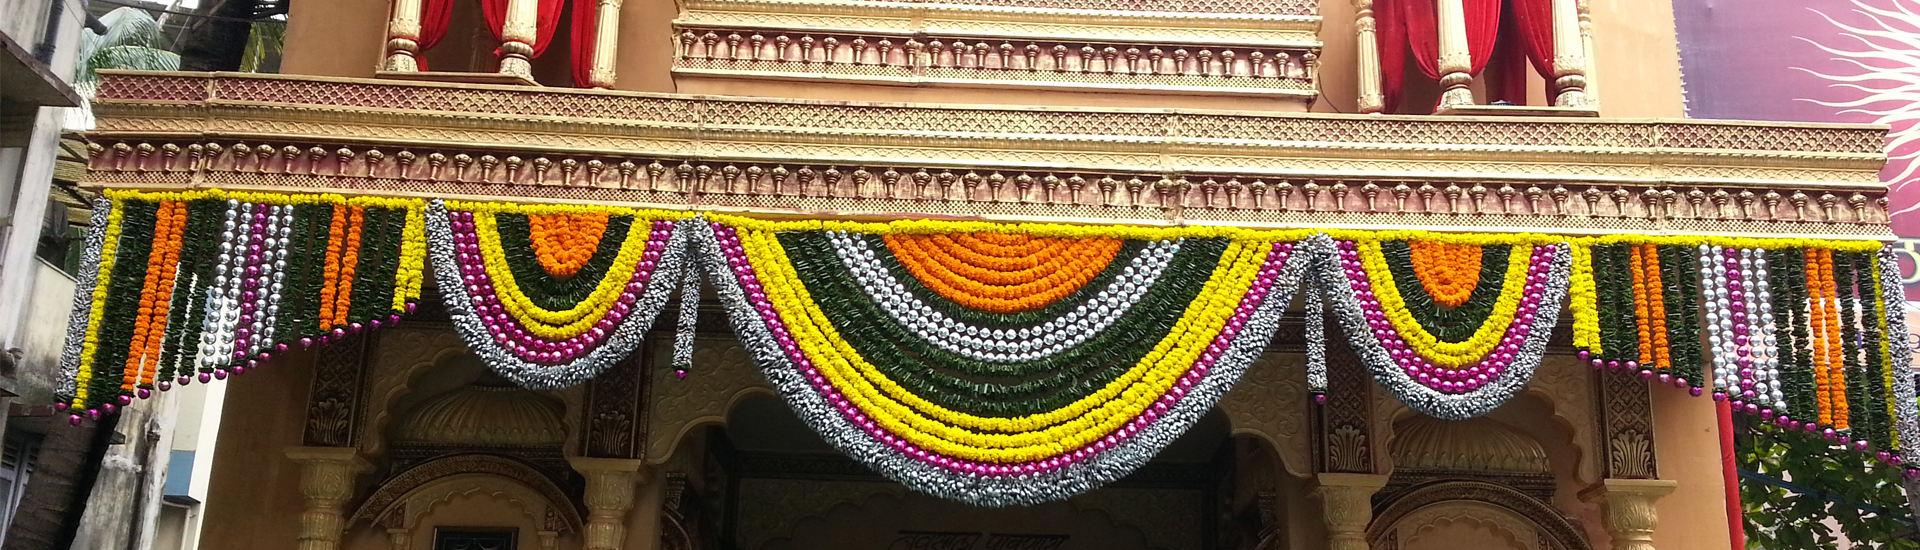 Entrance Decoration Toran with Zendu Pala Shewanti